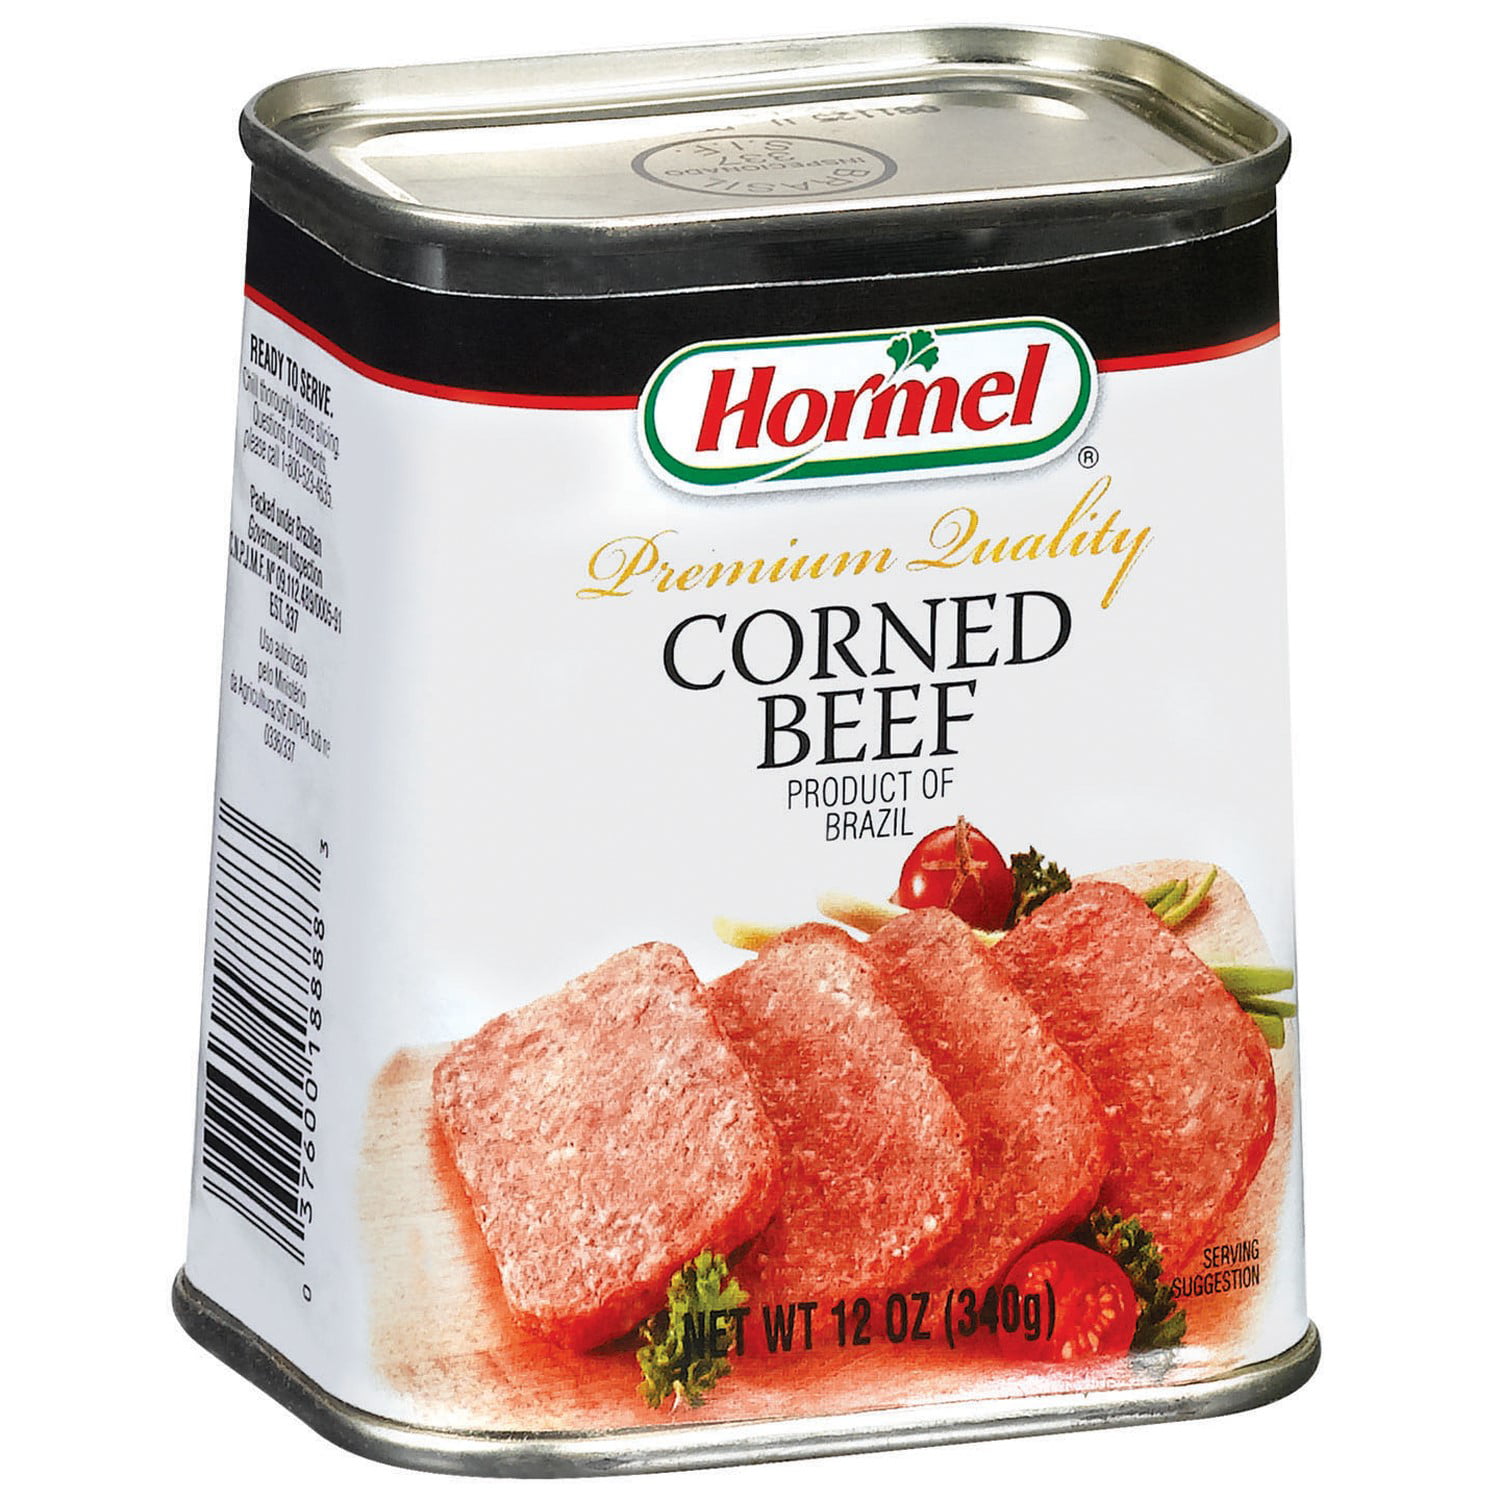 Hormel rich tasting Corned Beef, 12 Oz